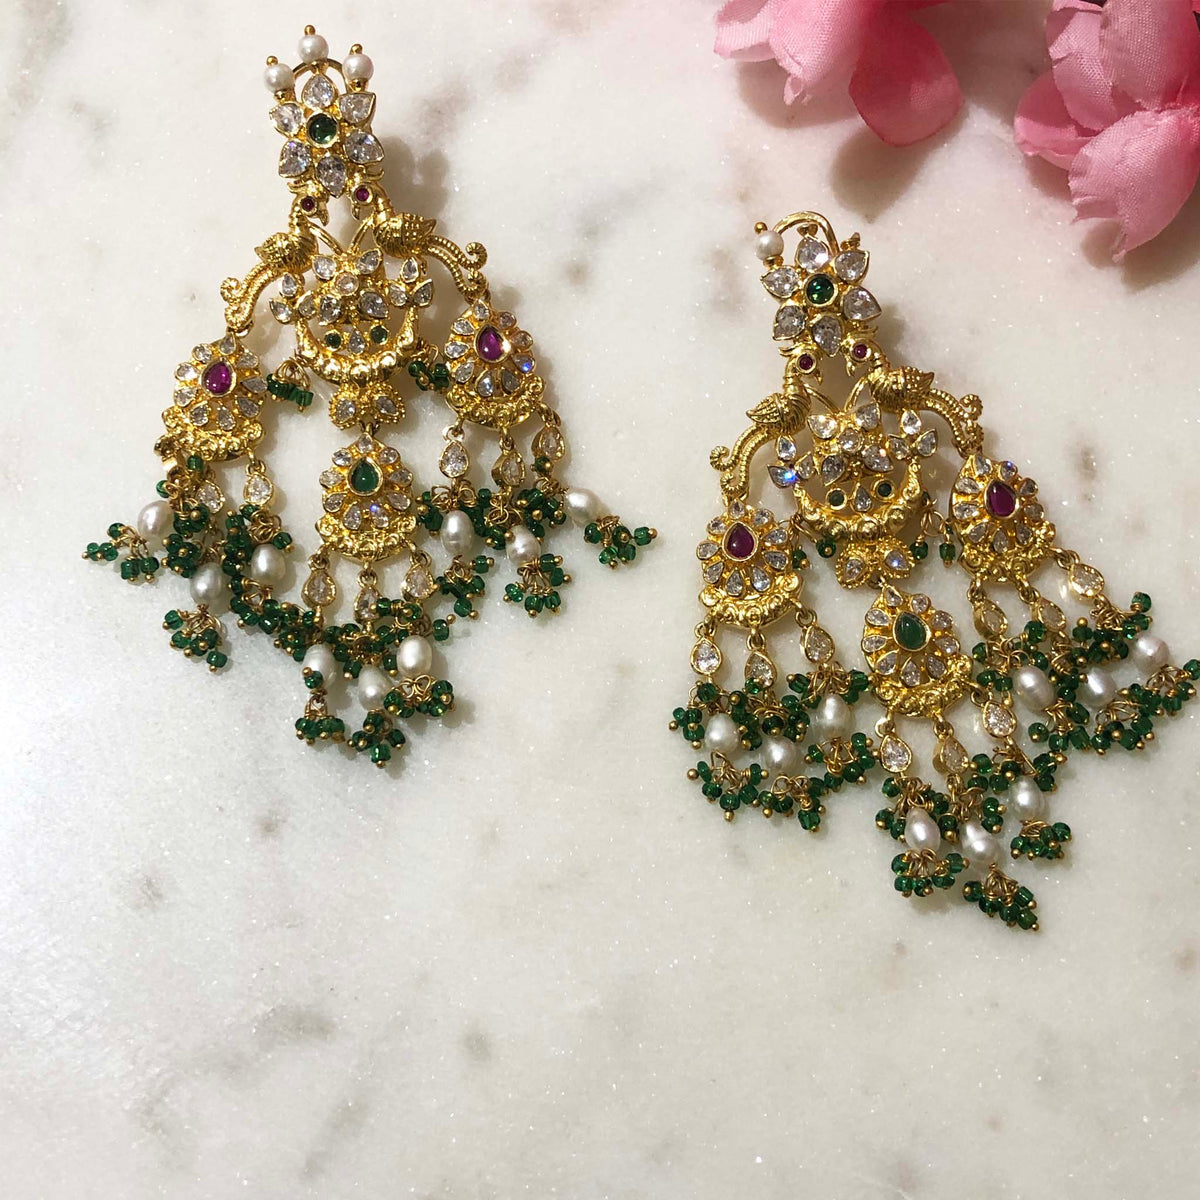 Buy Gold & Diamond Earrings | Earrings design